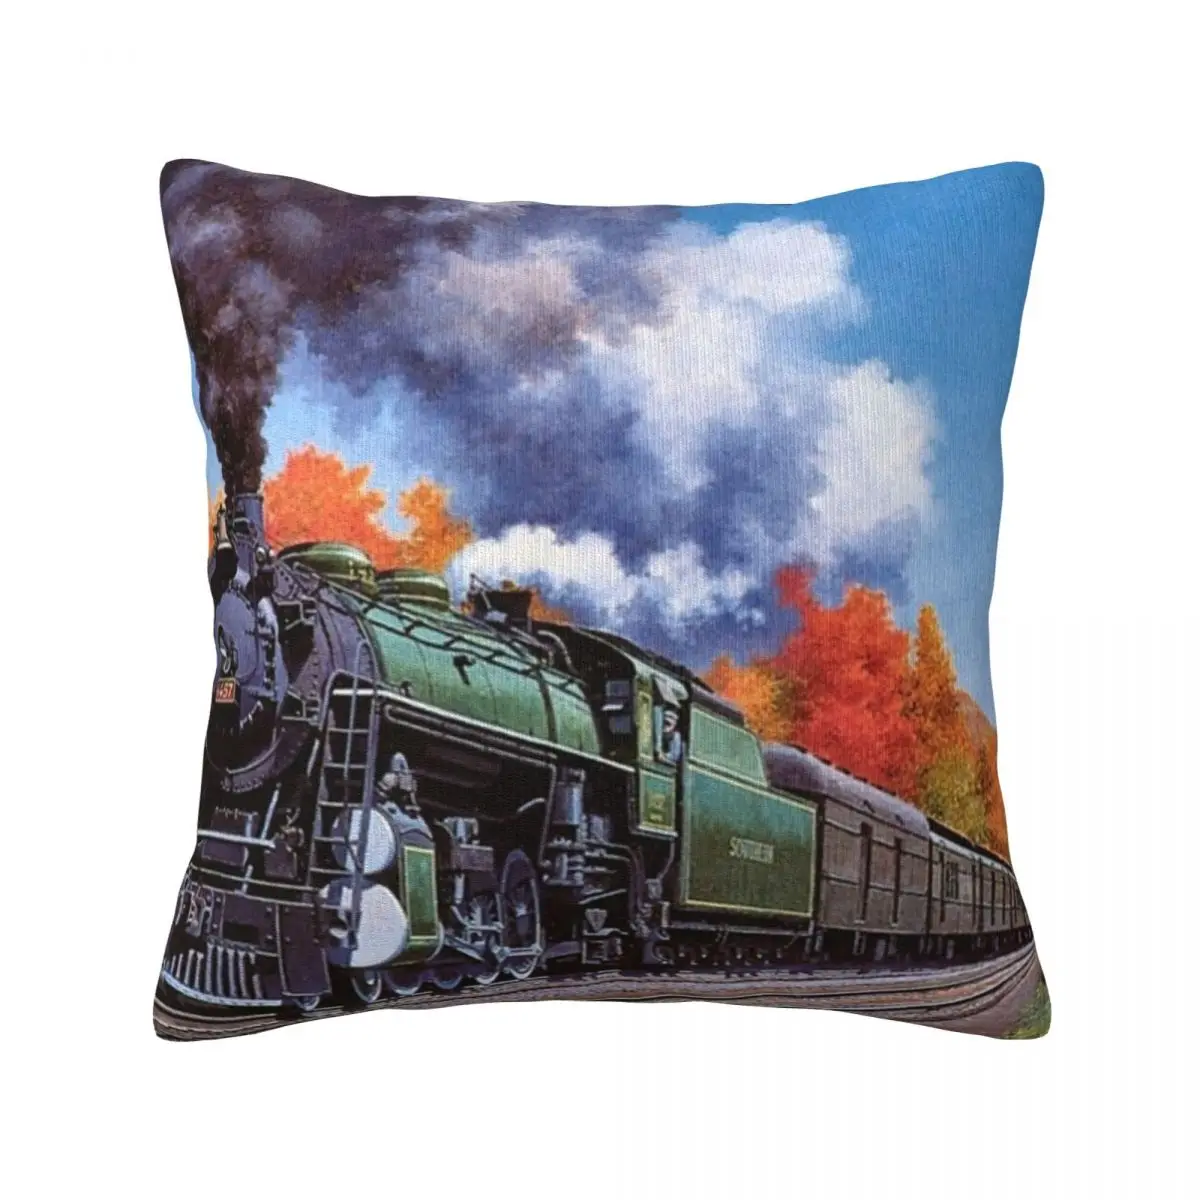 

Steam Trains Throw Pillow Cover Decorative Pillow Covers Home Pillows Shells Cushion Cover Zippered Pillowcase